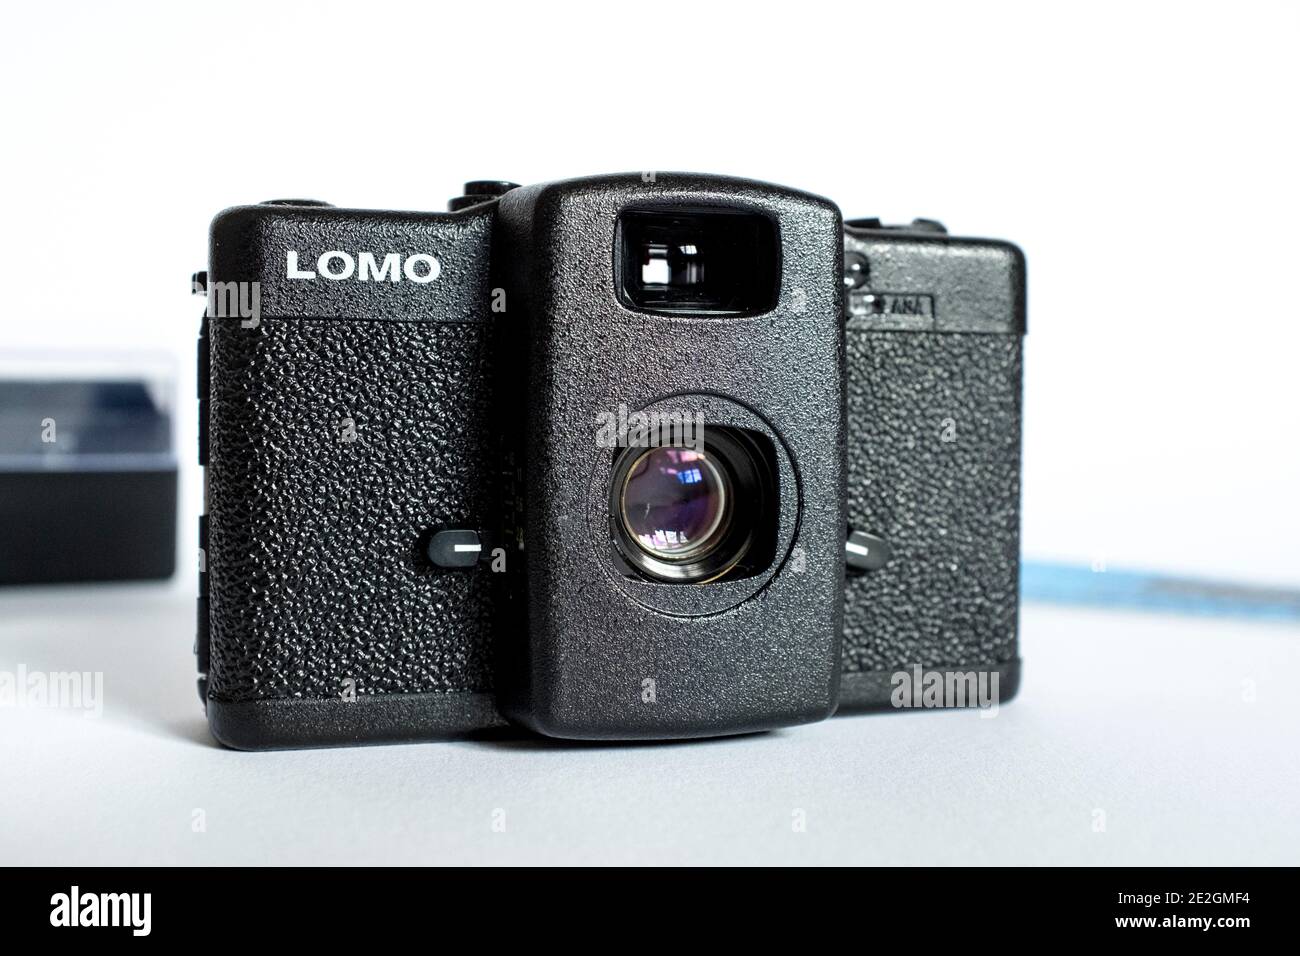 Lomo Minitar classic film camera Stock Photo - Alamy